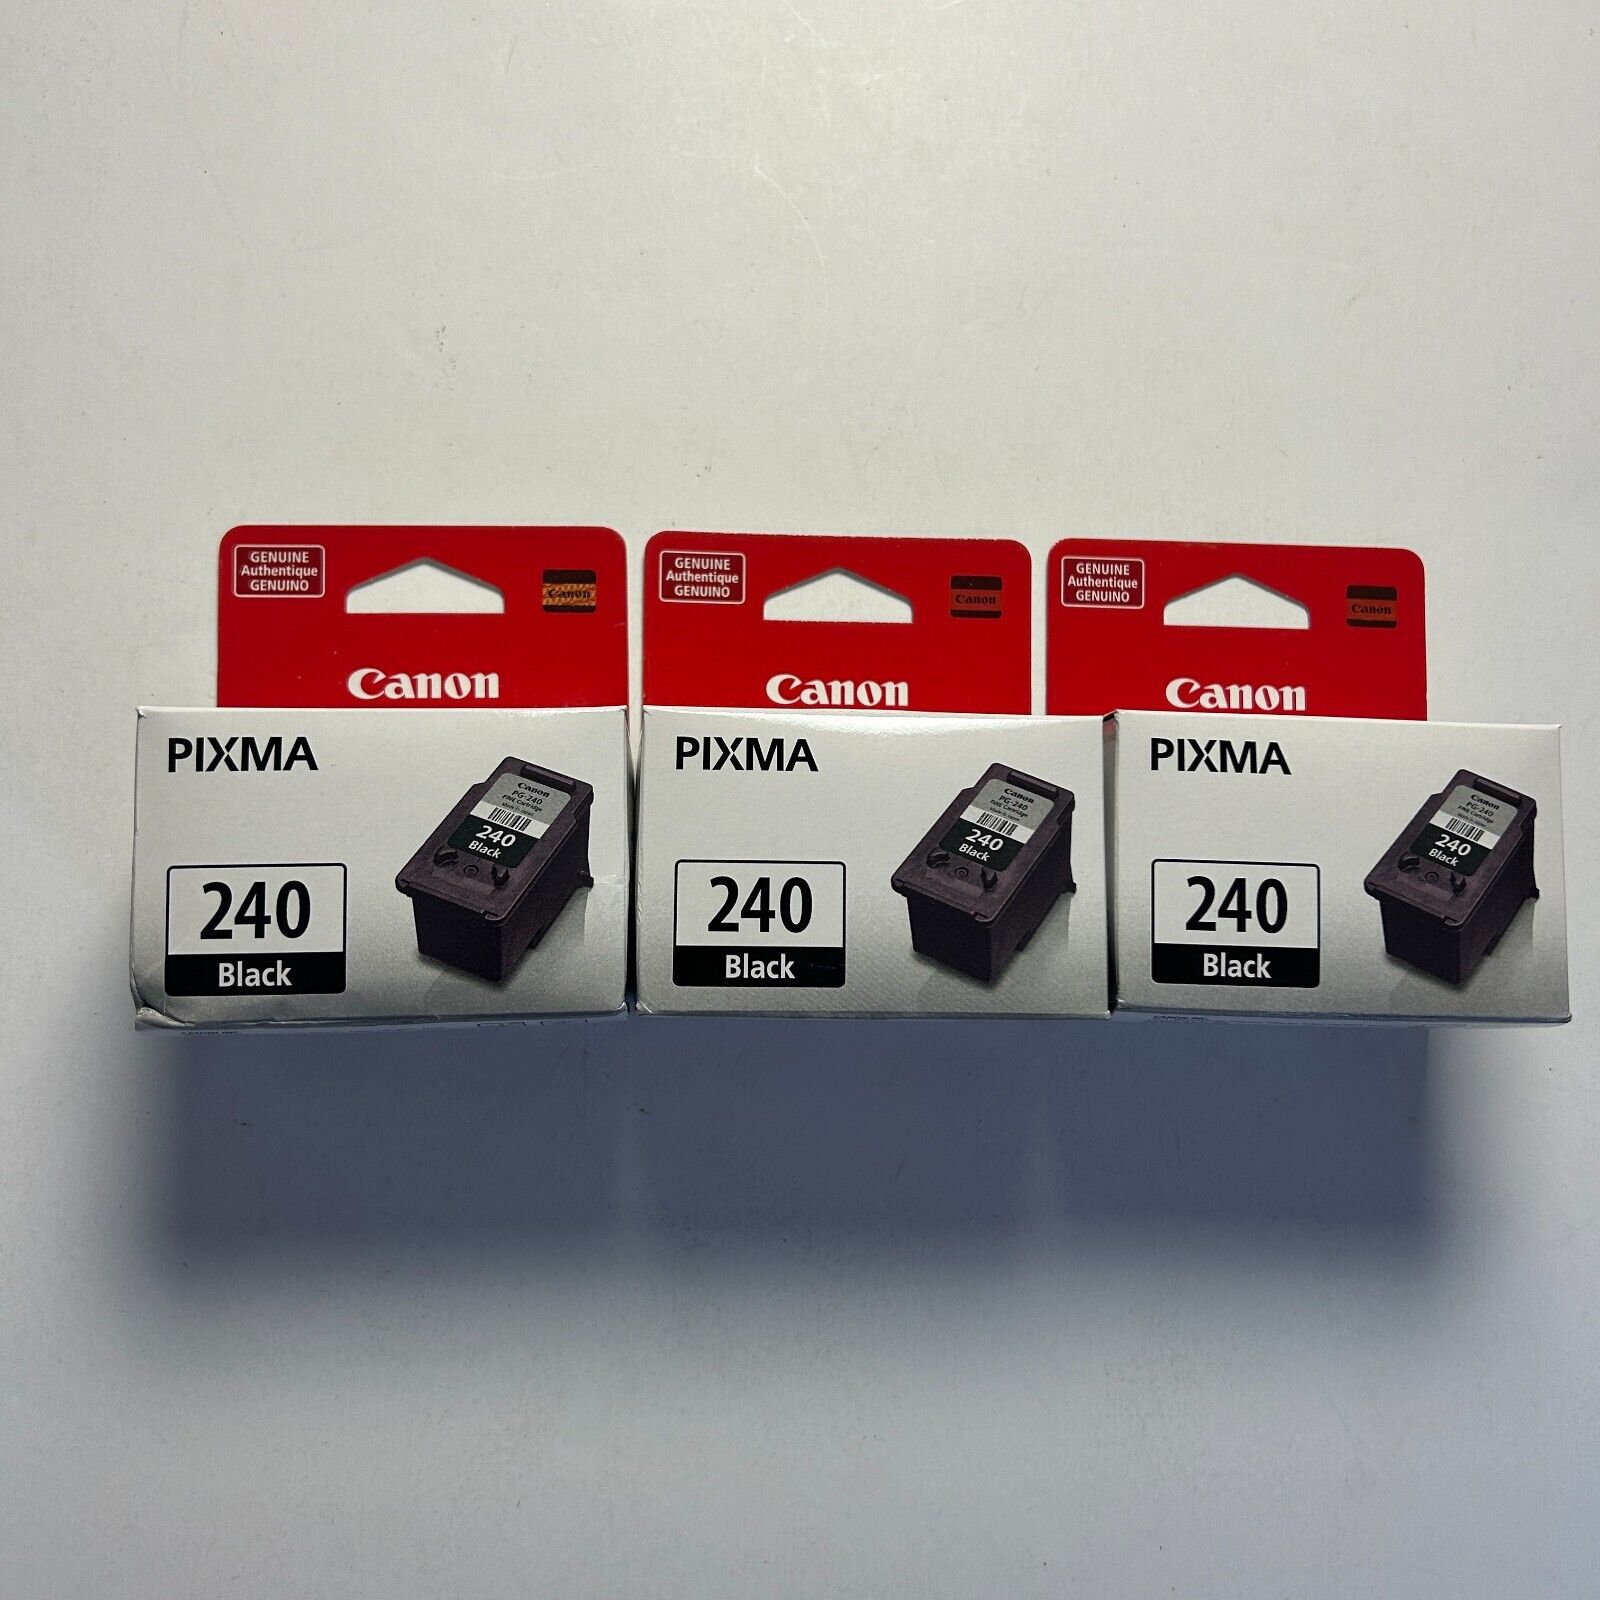 Lot of 3 Genuine Canon Pixma PG240 Black Ink Cartridge PG-240 OEM New Sealed Box